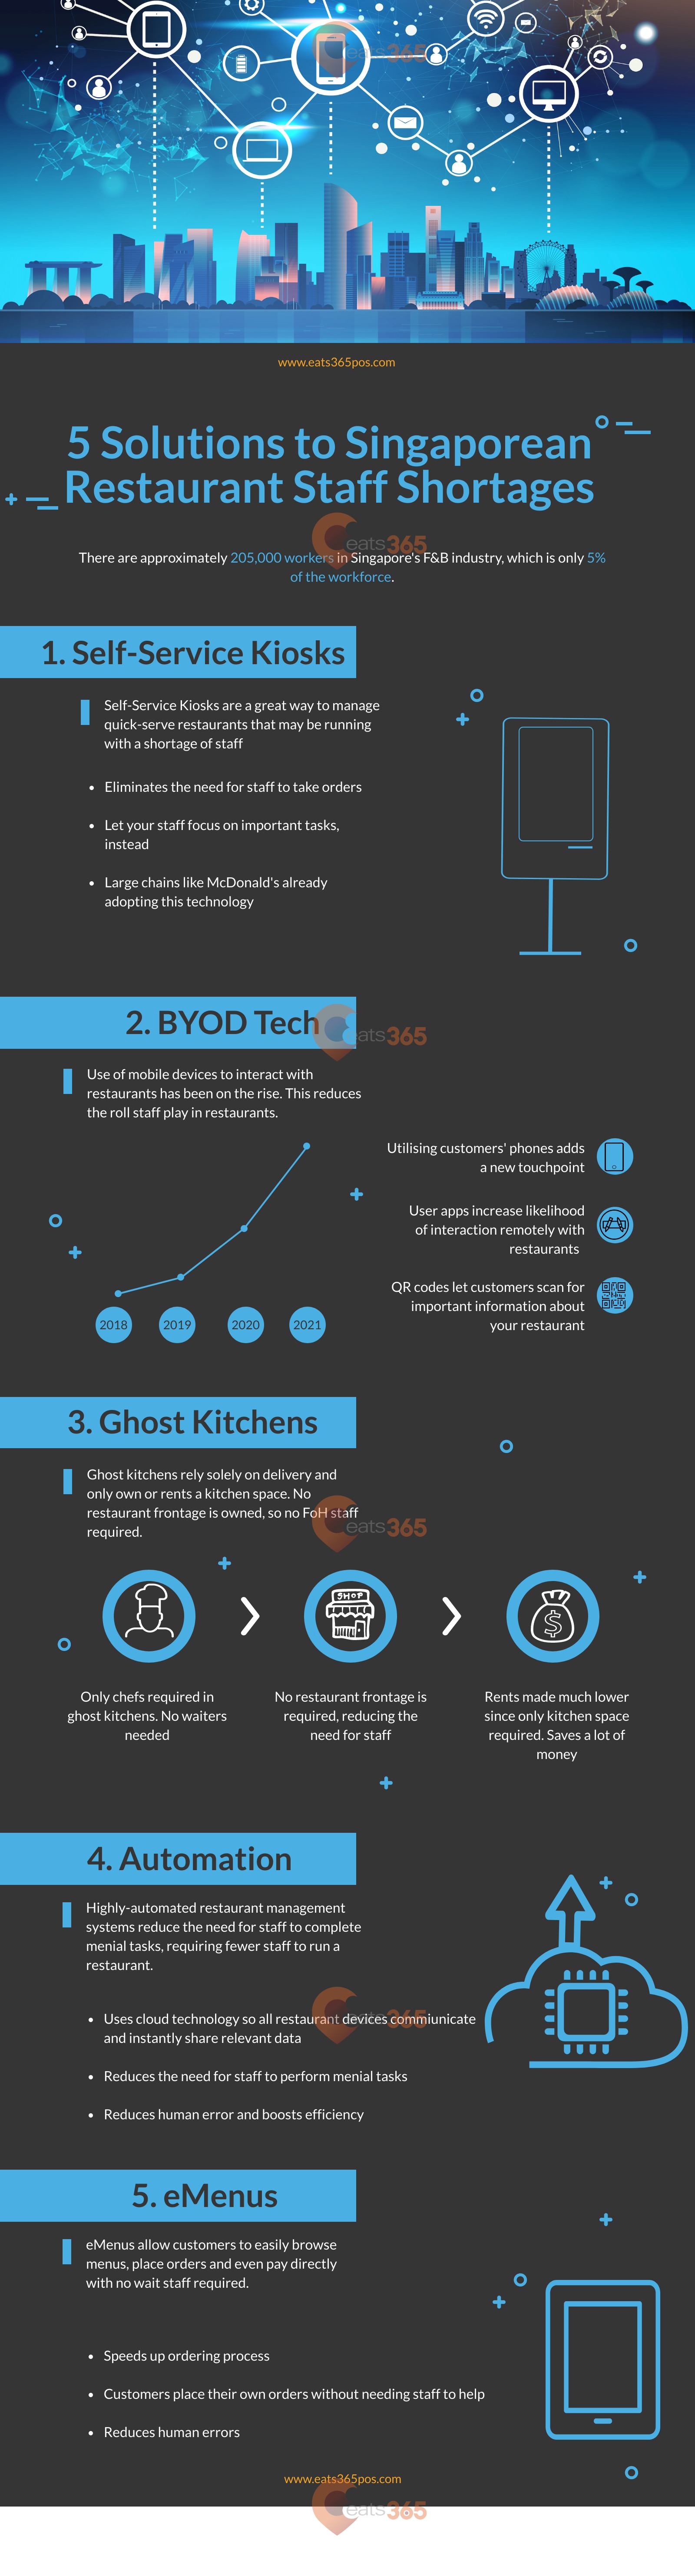 Free infographic Singapore manpower shortage restaurant technology solutions